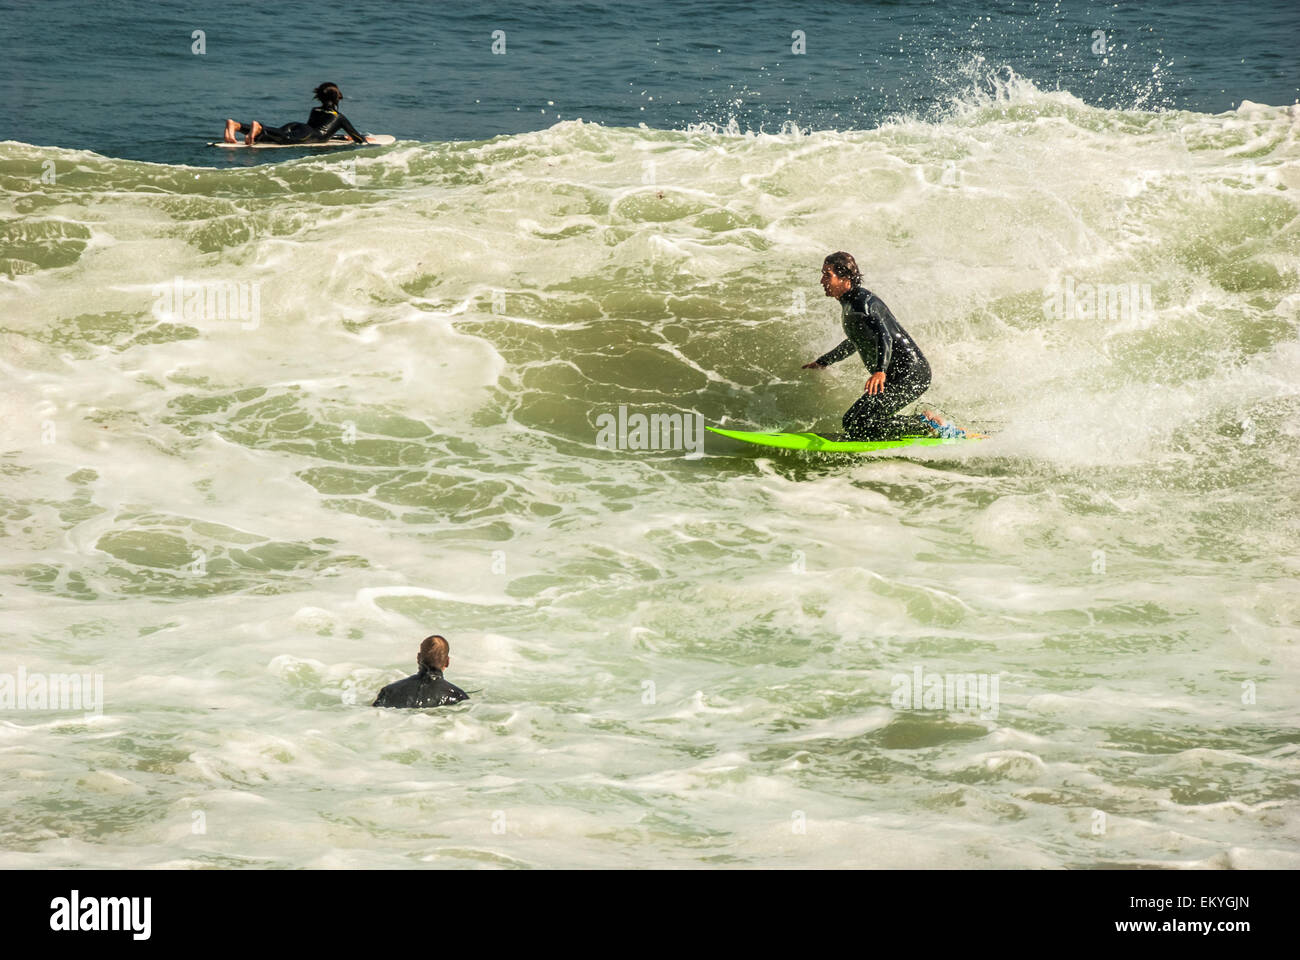 Kneeboarding surfer shoots across a large, overhead shorebreak wave at Malibu Beach, California. USA. Stock Photo